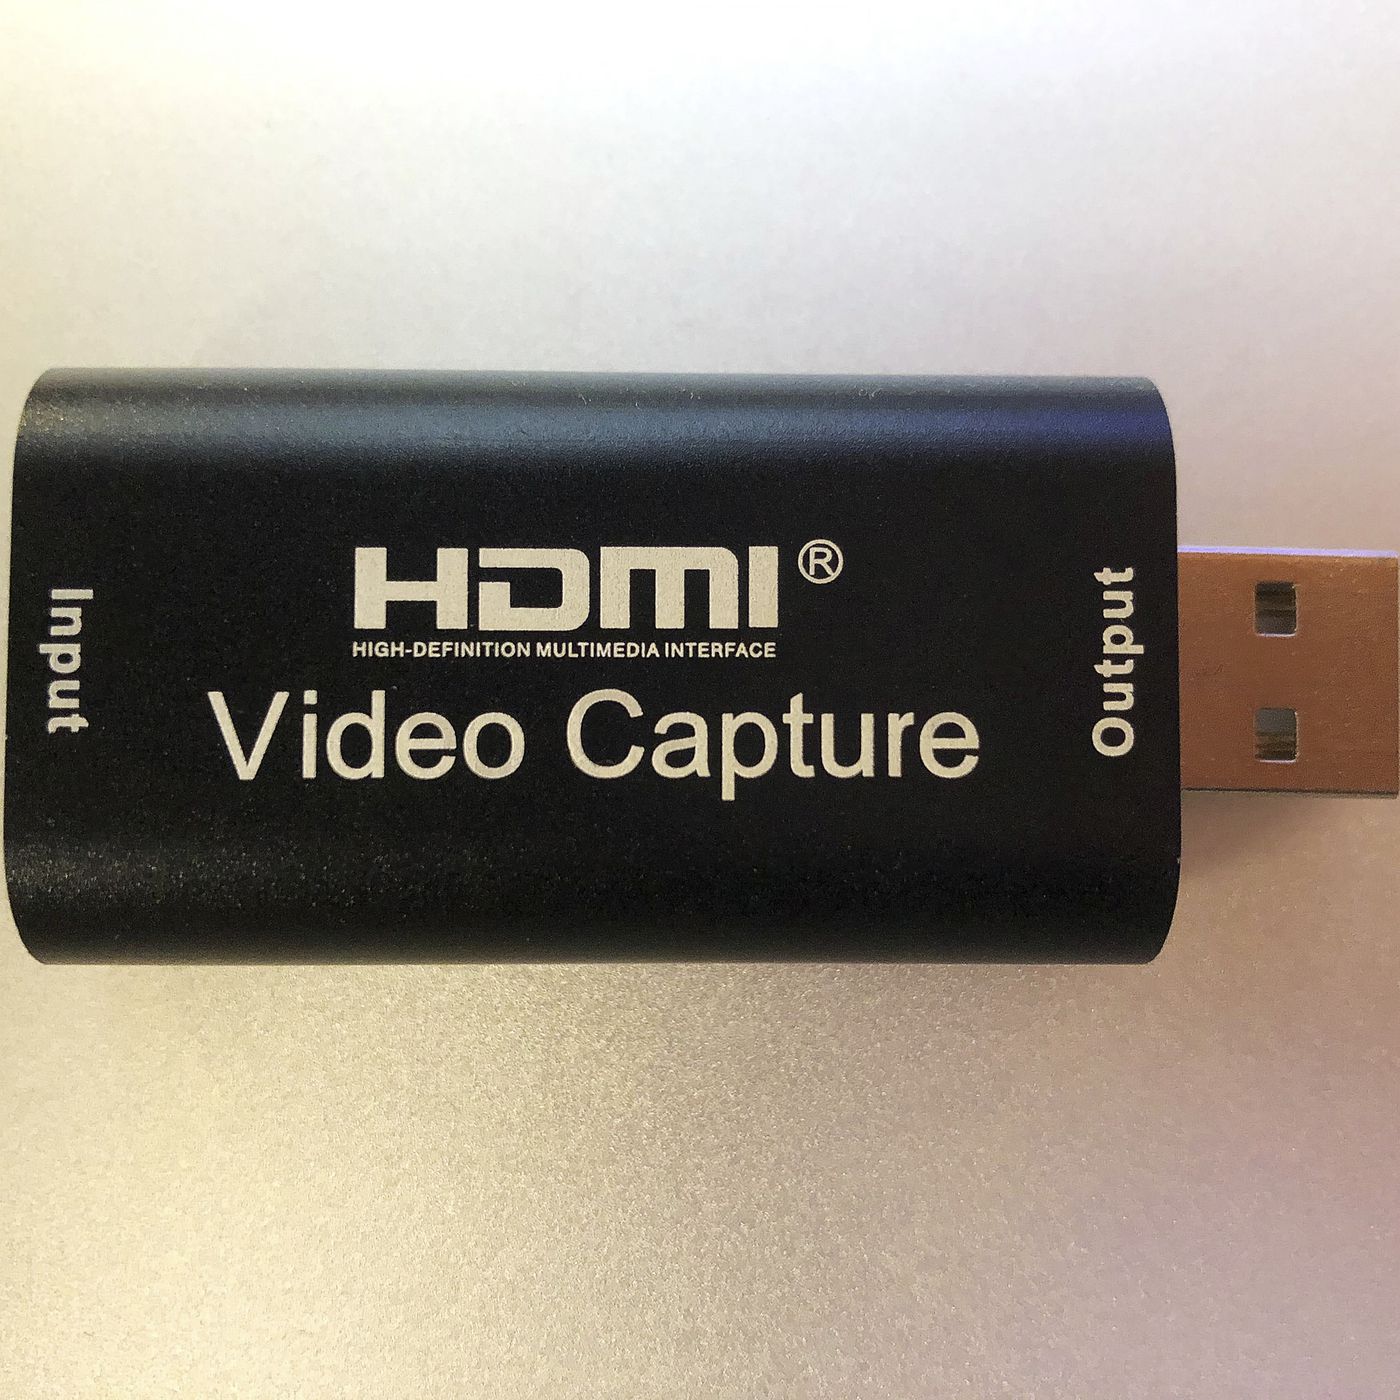 vivitar creator series hdmi to usb video capture card